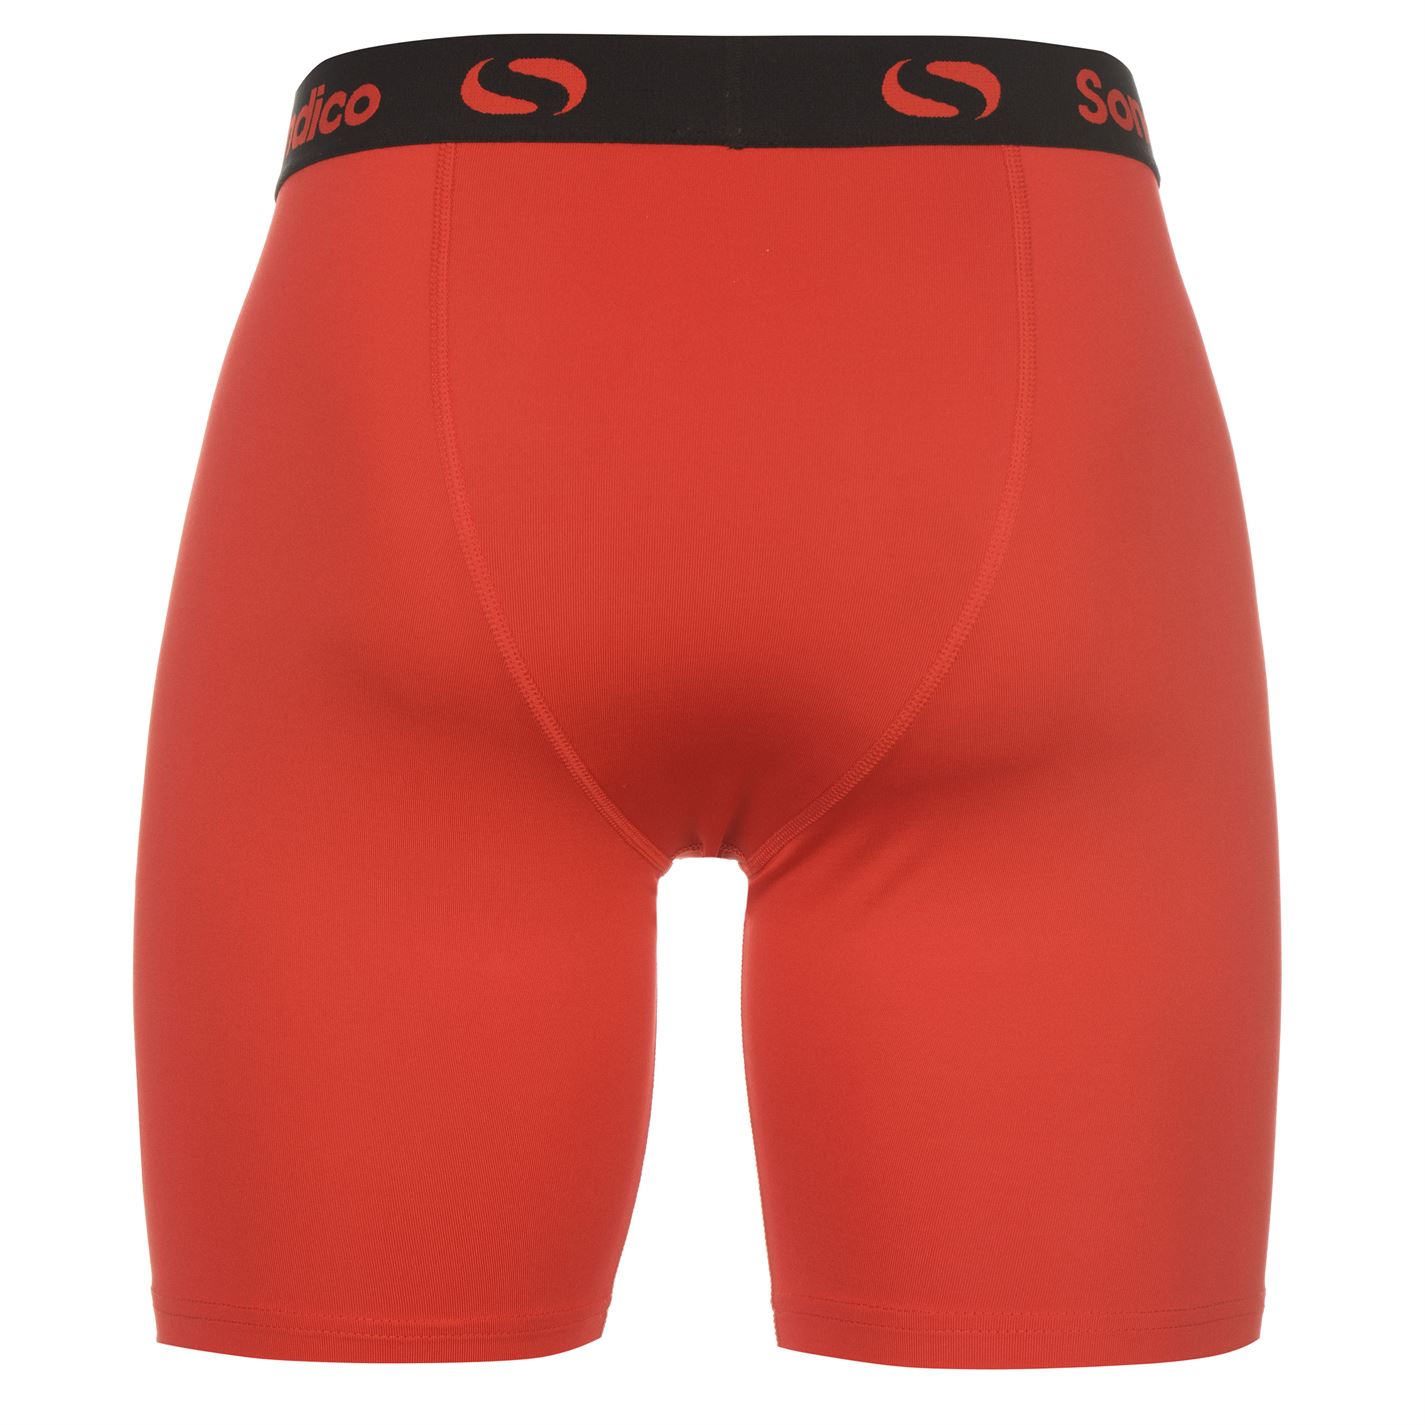 Sondico Mens Core 6 Base Layer Shorts Compression Fit Bottoms | eBay